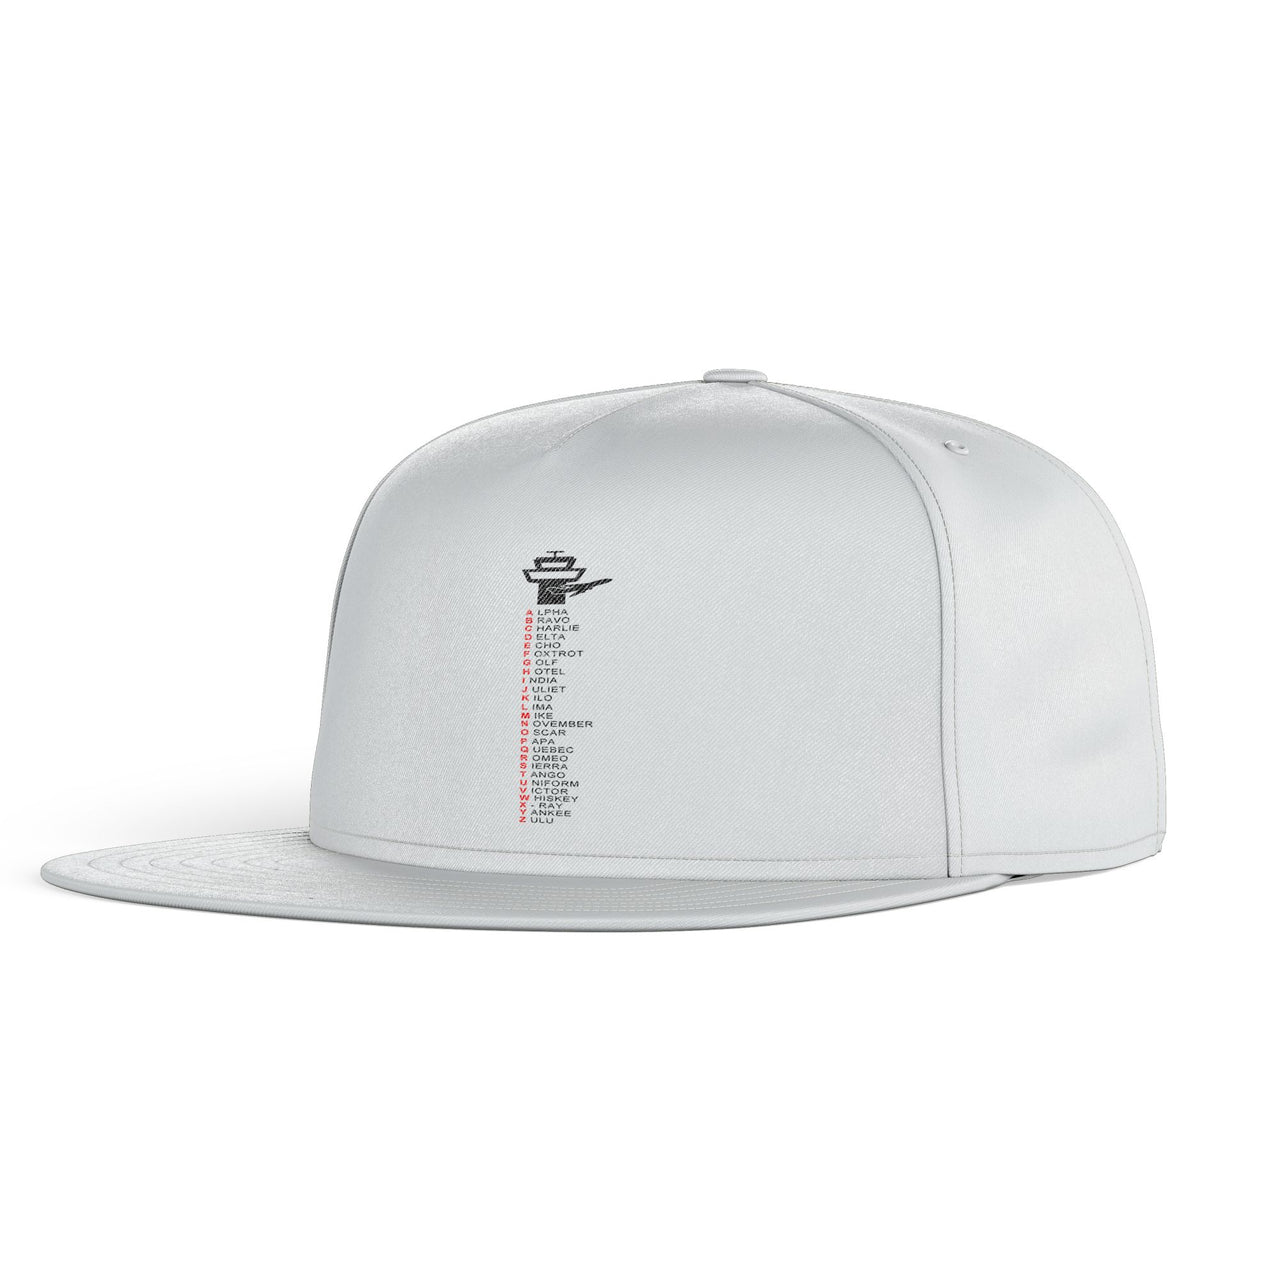 Aviation Alphabet Designed Snapback Caps & Hats